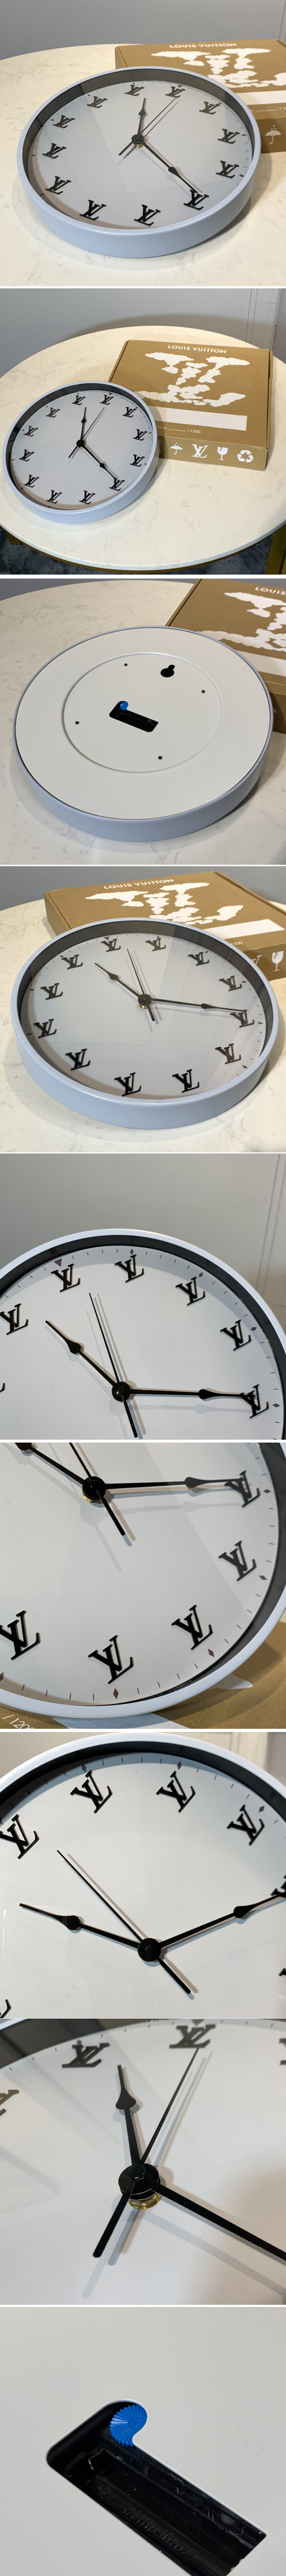 Replica Louis Vuitton Wall Clock